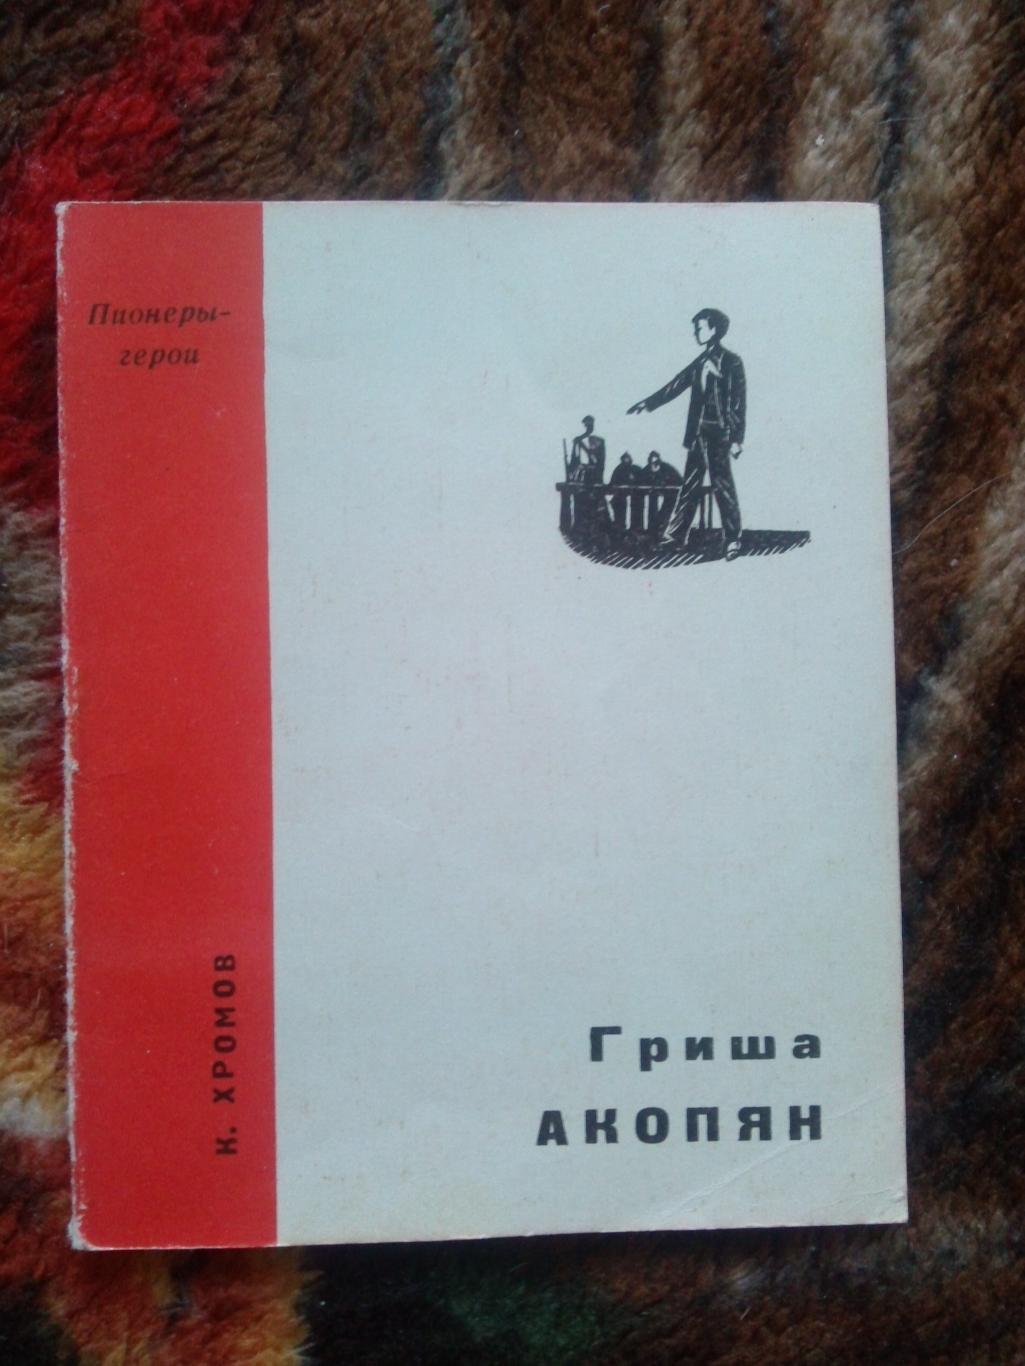 Пионеры-герои (Плакат + брошюра) 1967 г. Гриша Акопян (Пионер , агитация) 3